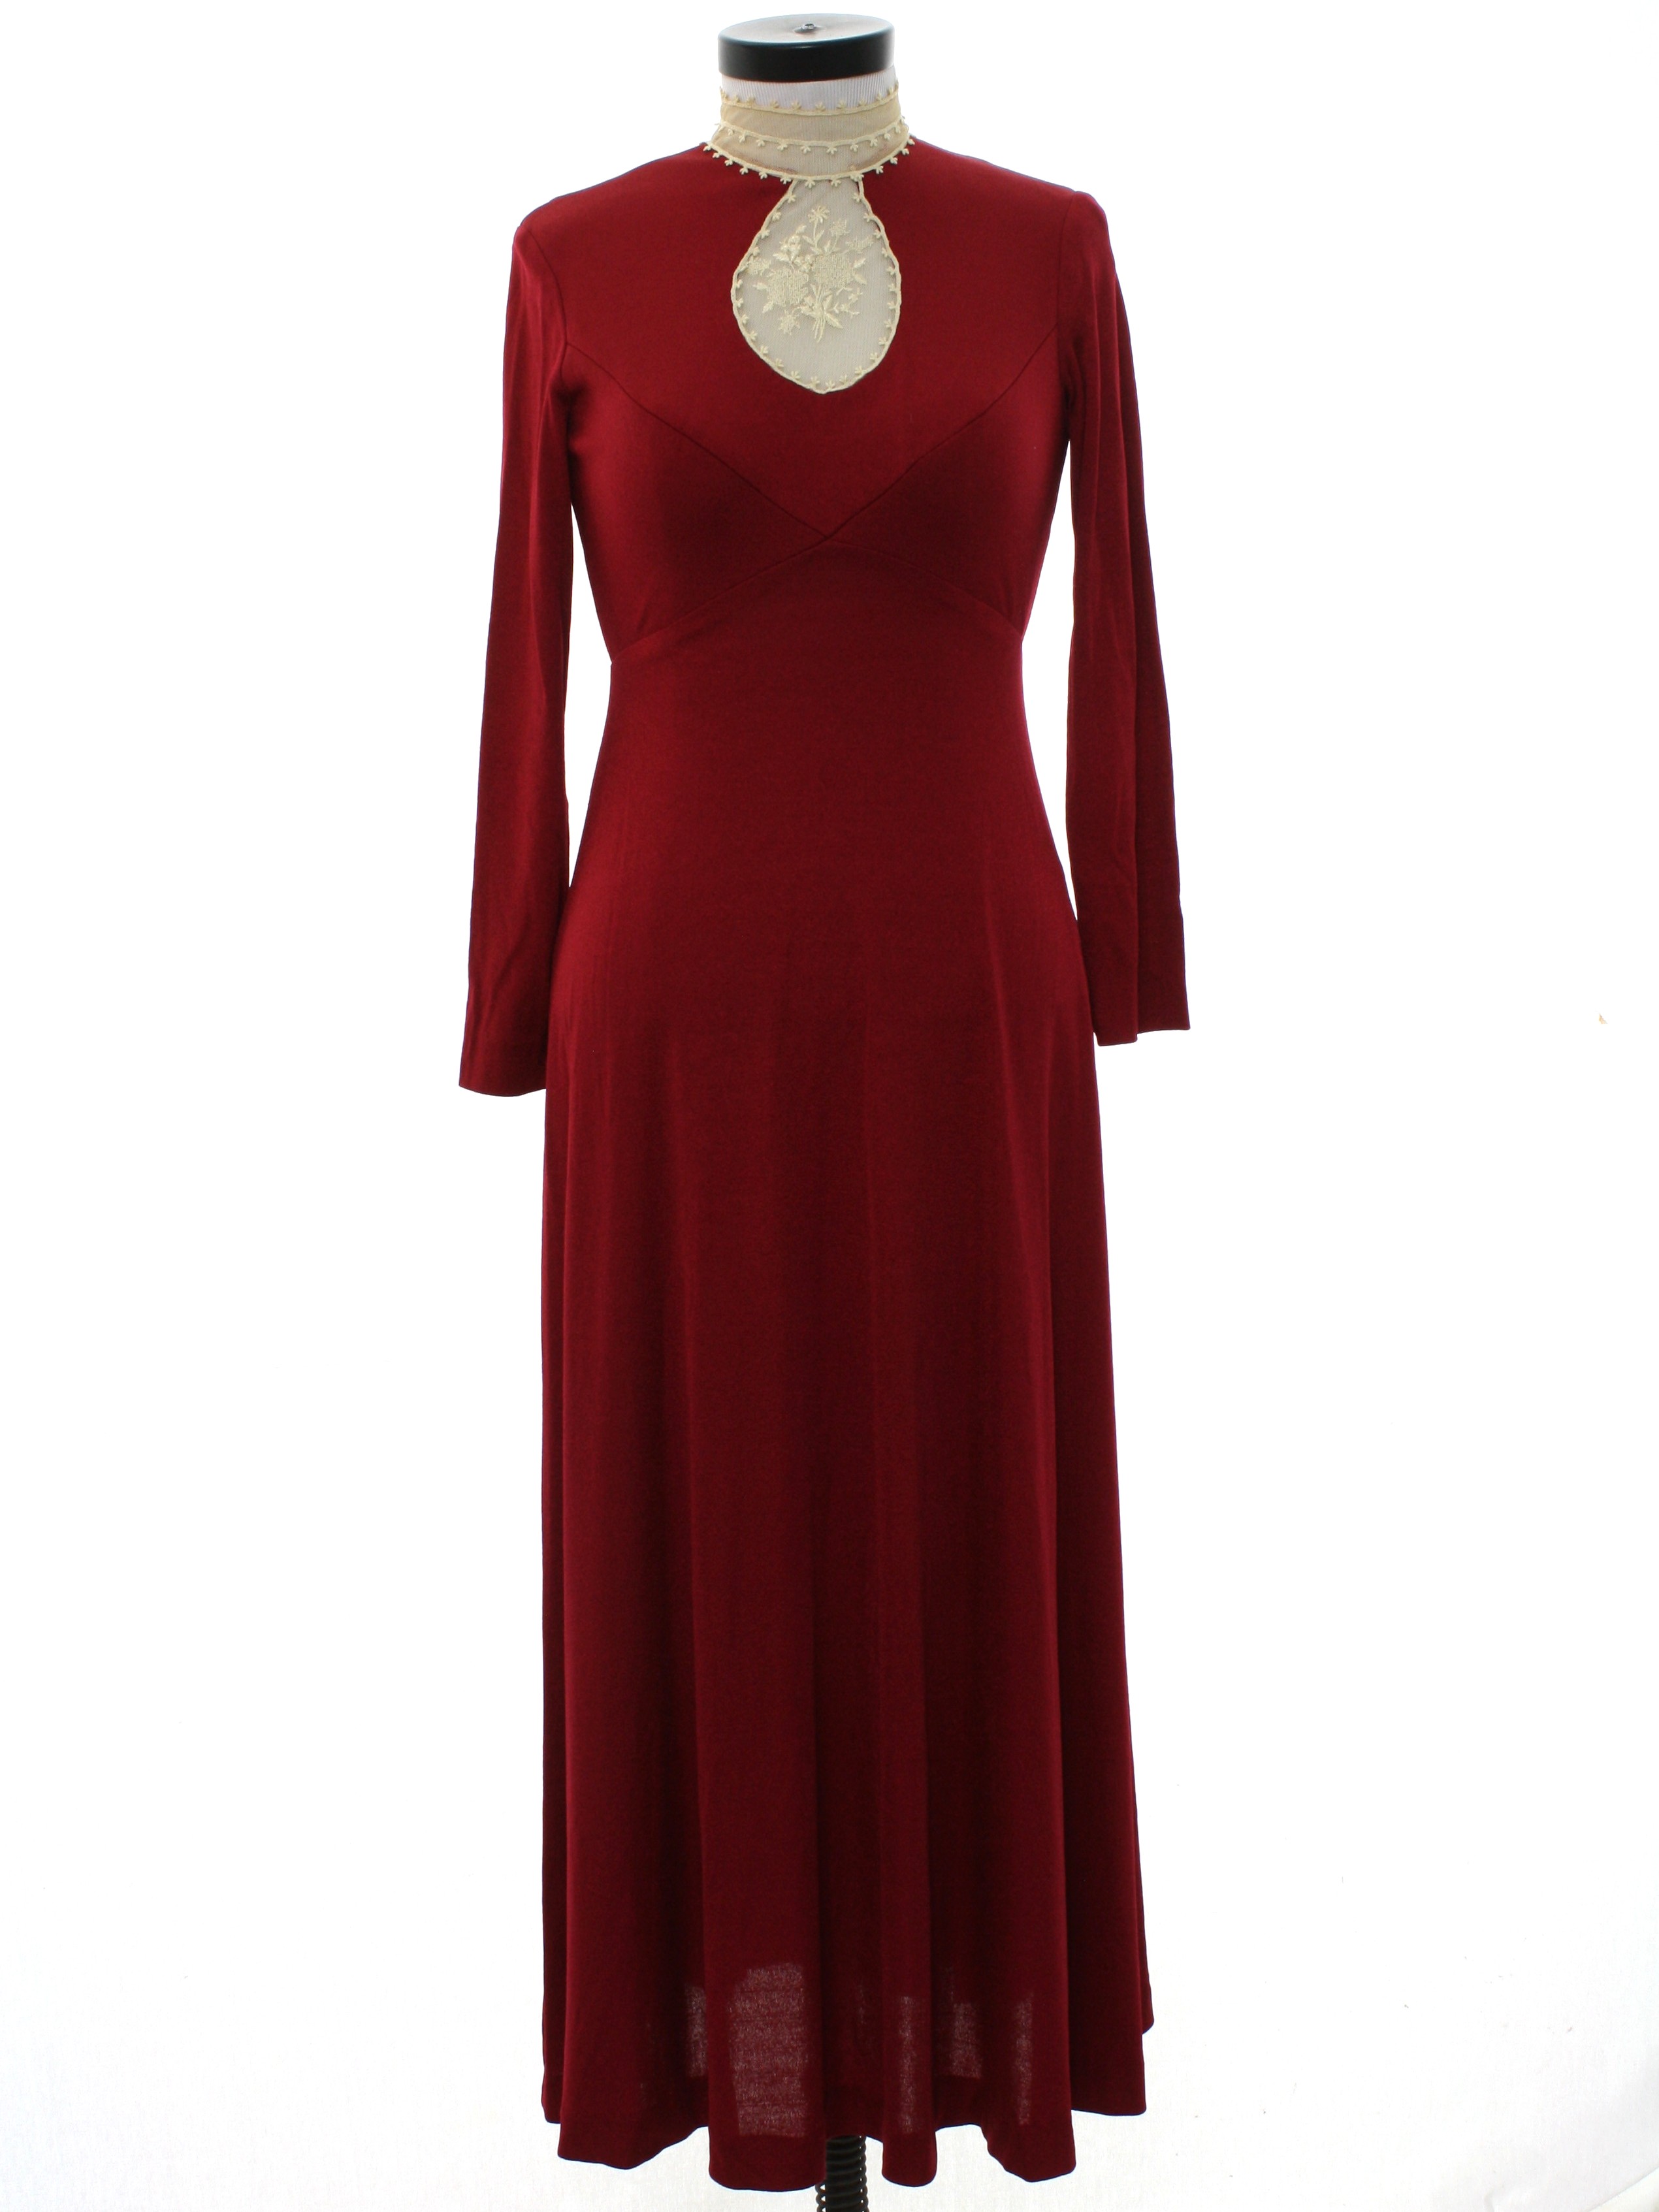 Retro 1970's Dress (Label Missing) : 70s -Label Missing- Womens wine ...